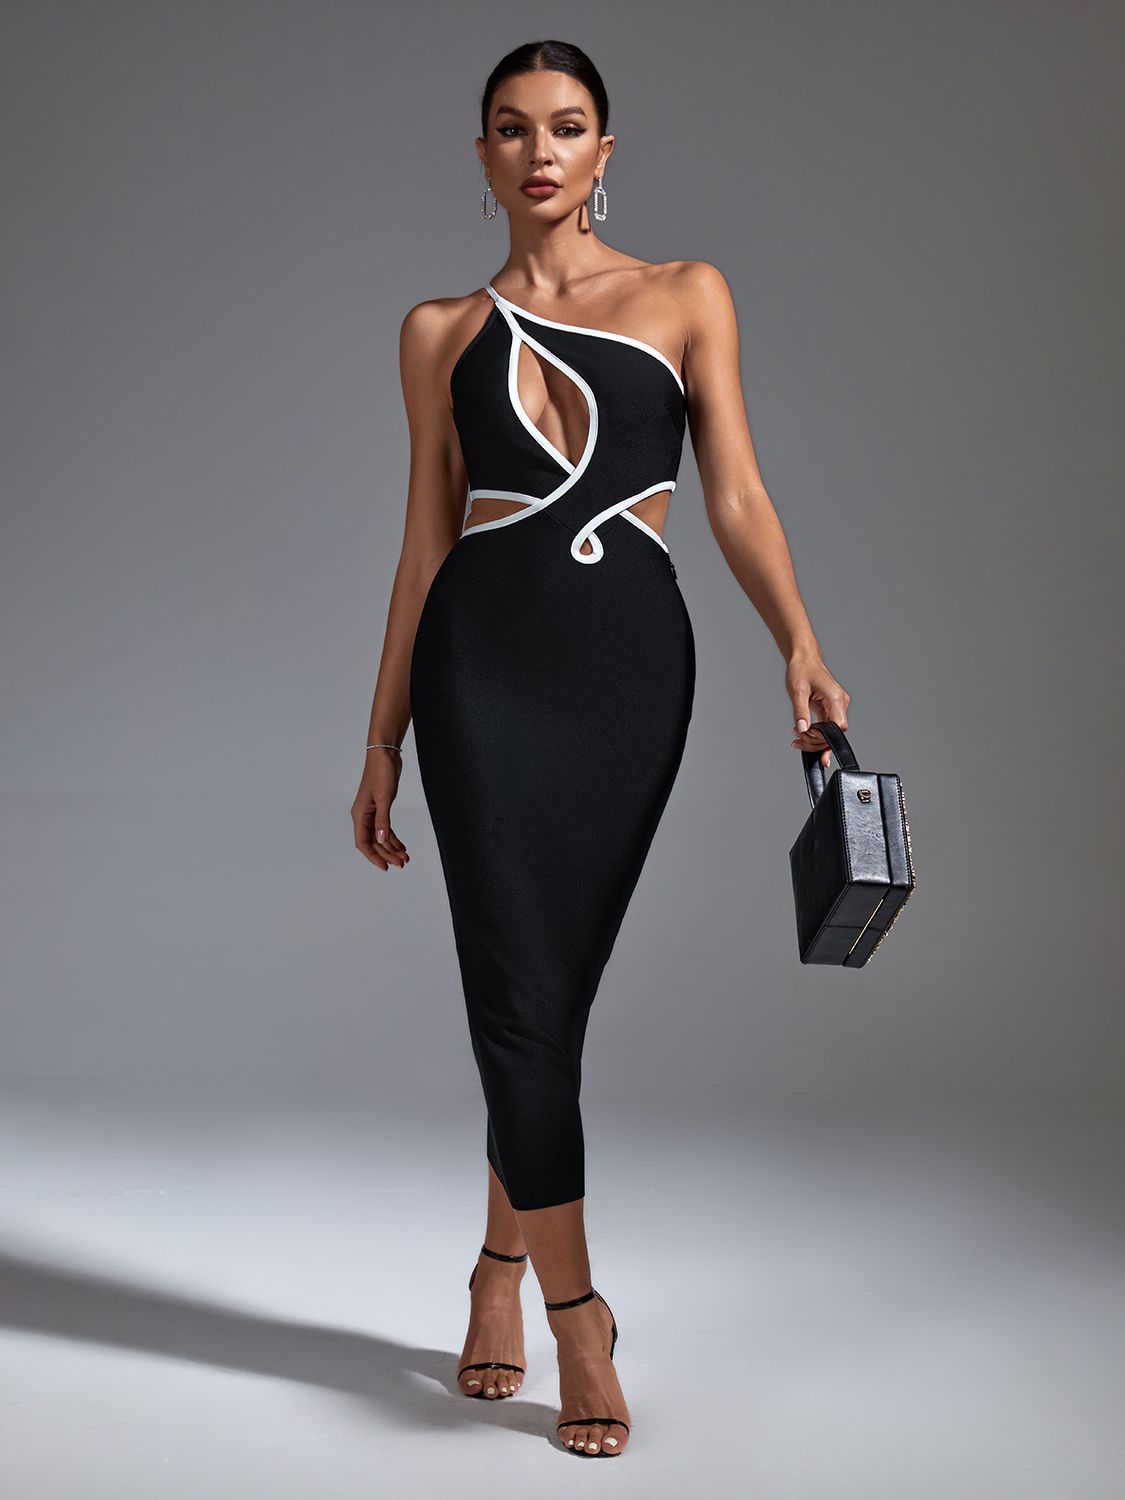 Sleek Black Cut Out Midi Dress